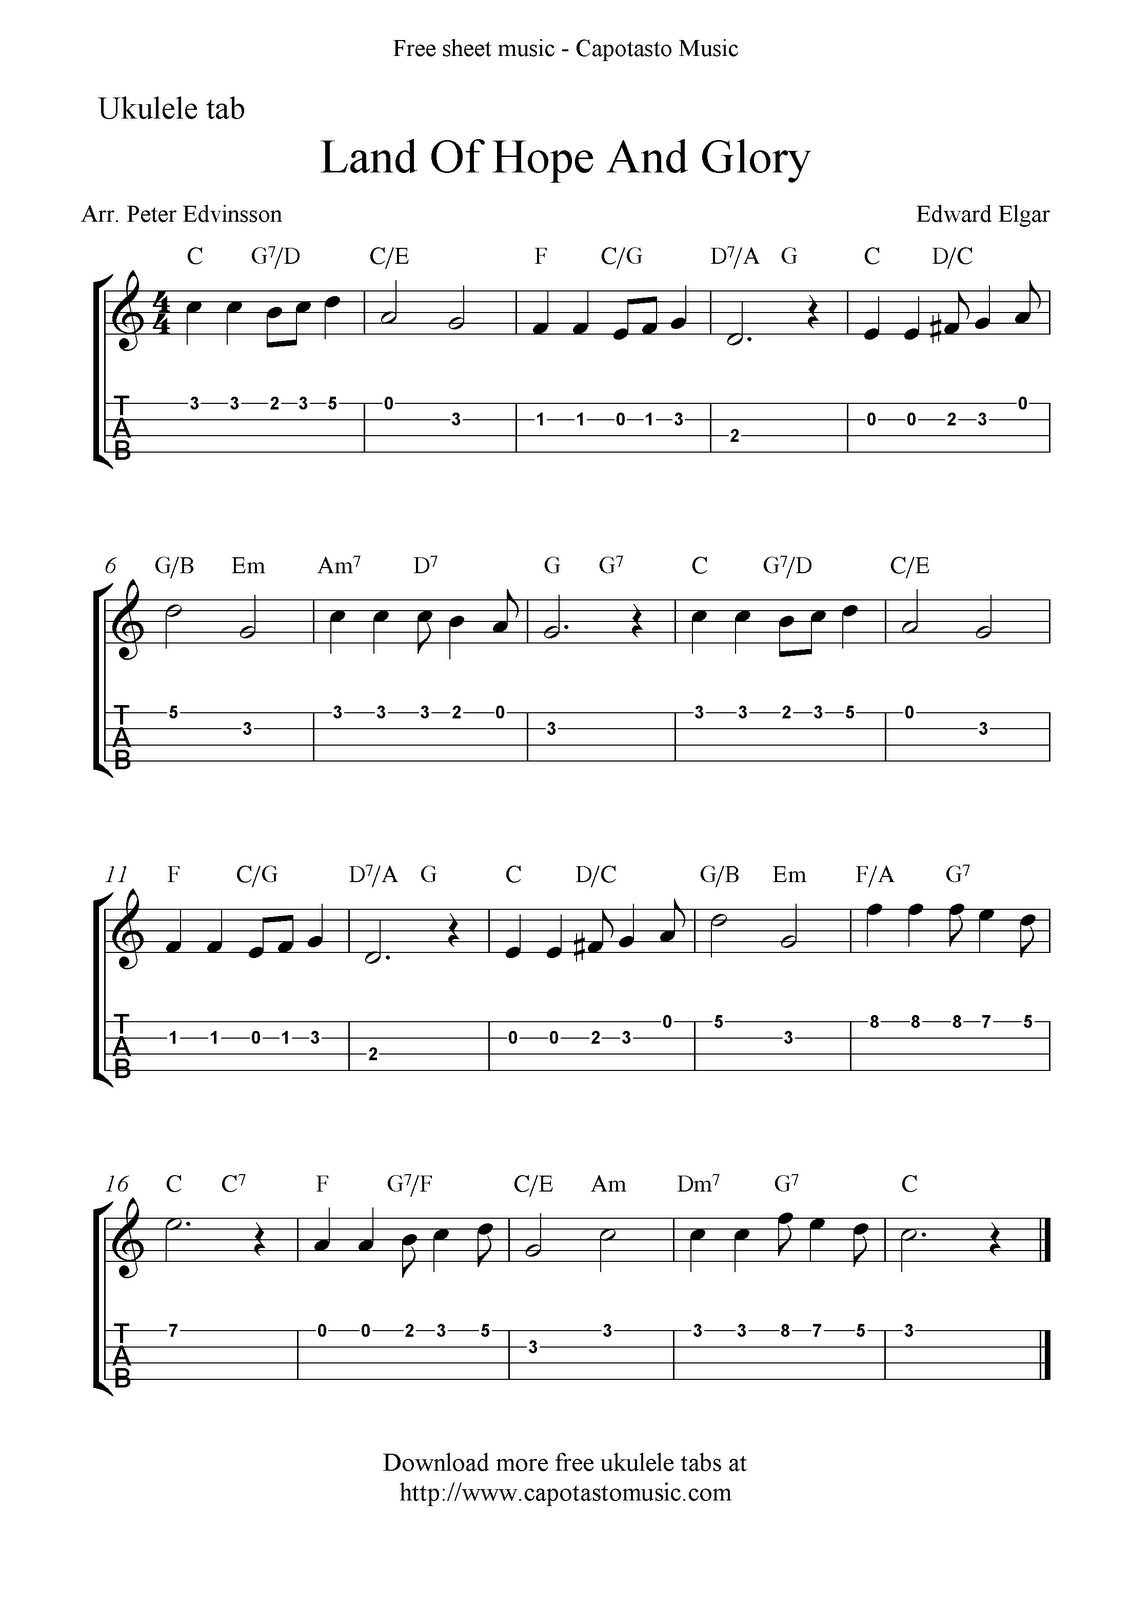 Free Sheet Music Scores: Land Of Hope And Glory (Pomp And - Free Printable Sheet Music Pomp And Circumstance